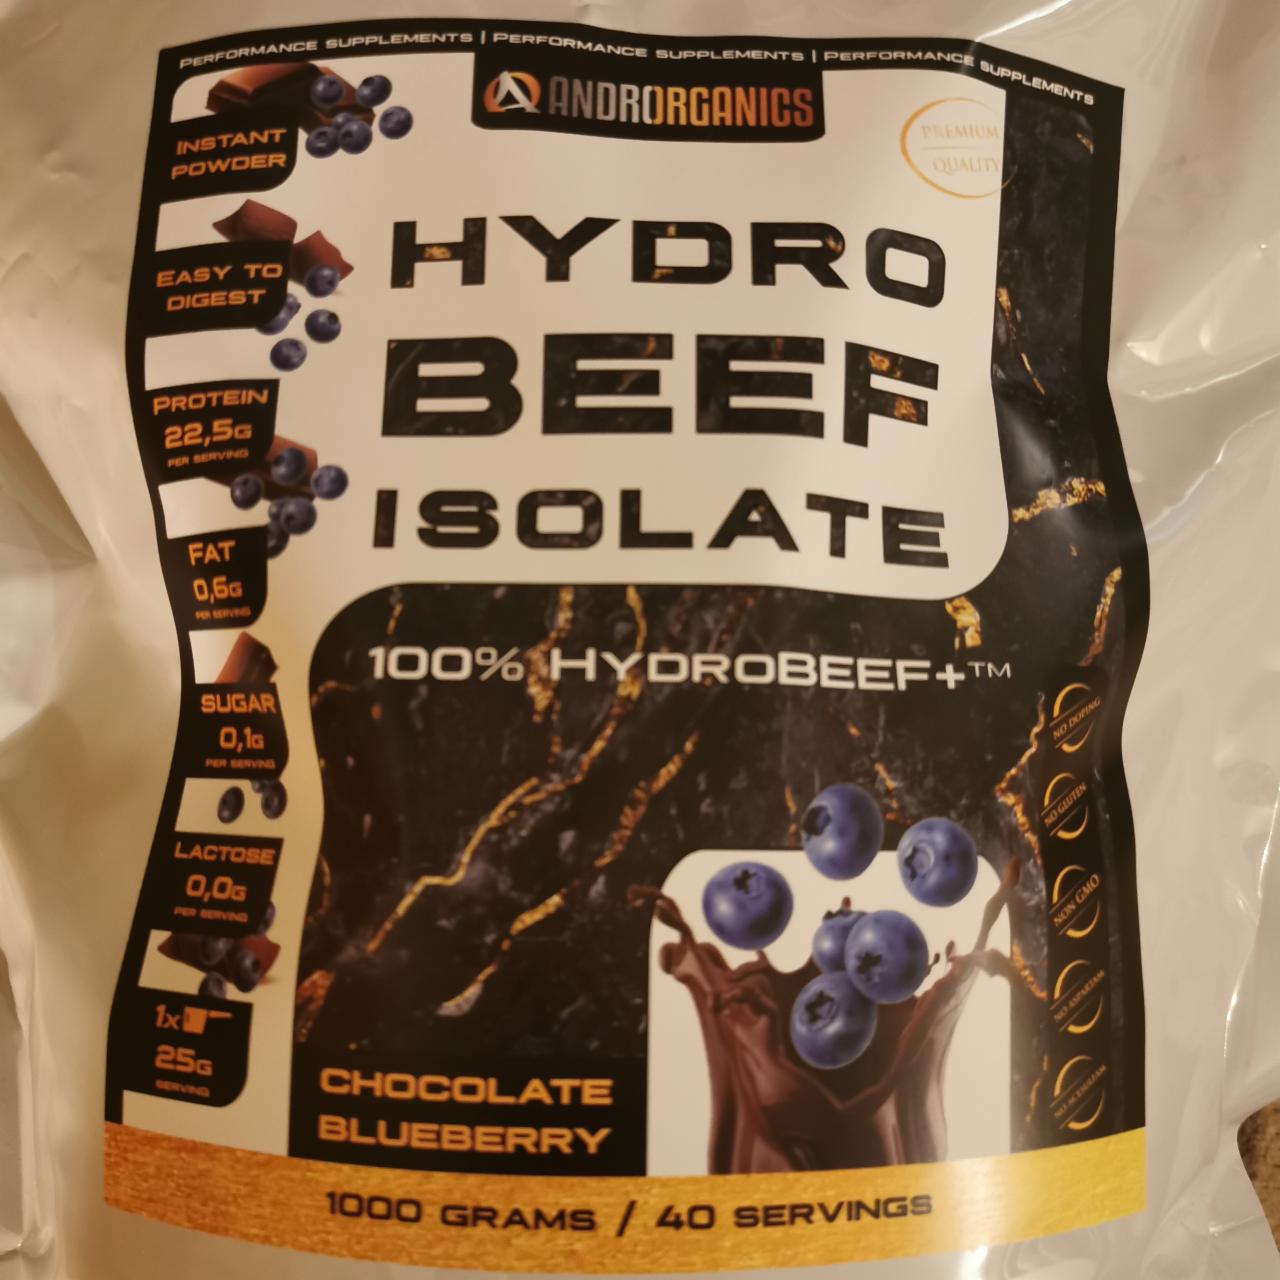 Fotografie - Hydro beef Isolate Chocolate Blueberry Androrganics